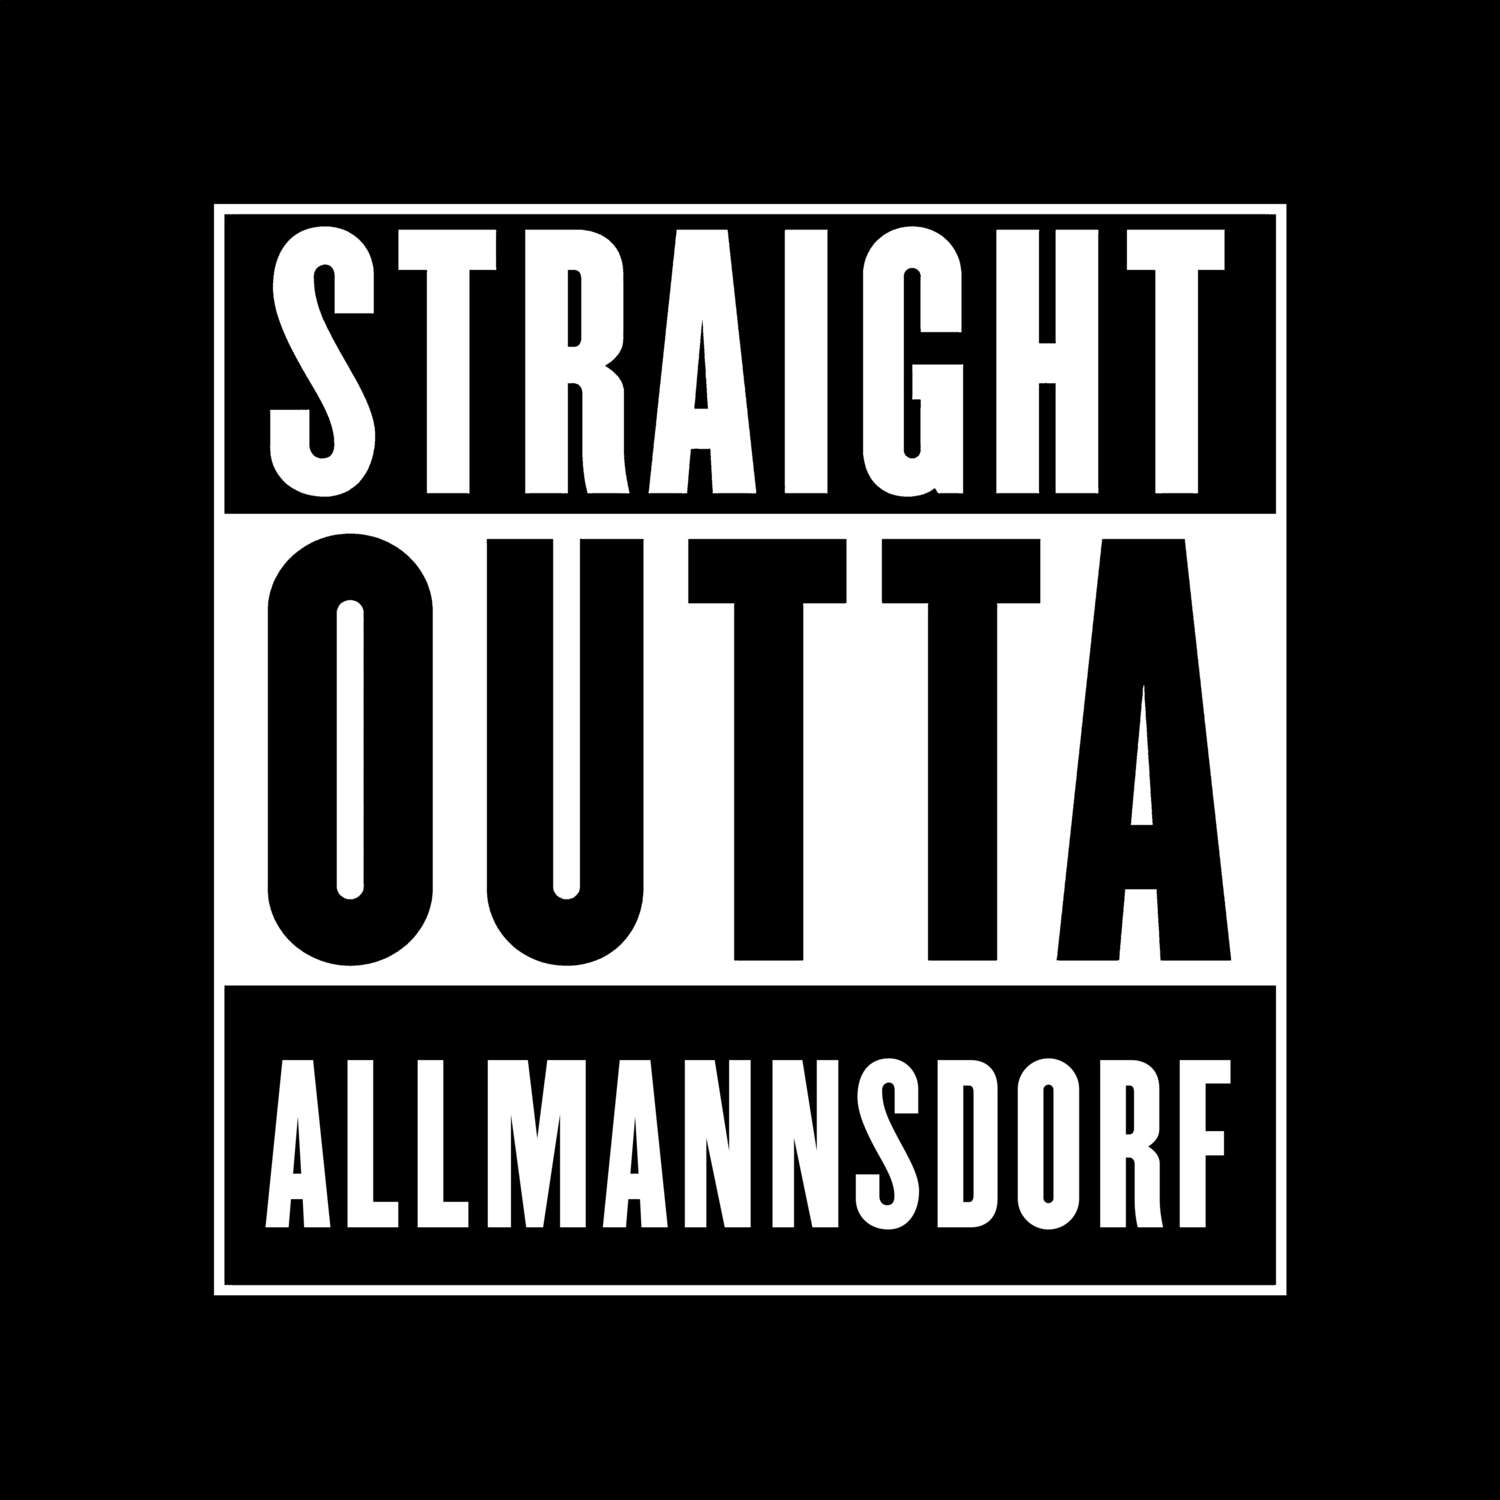 Allmannsdorf T-Shirt »Straight Outta«